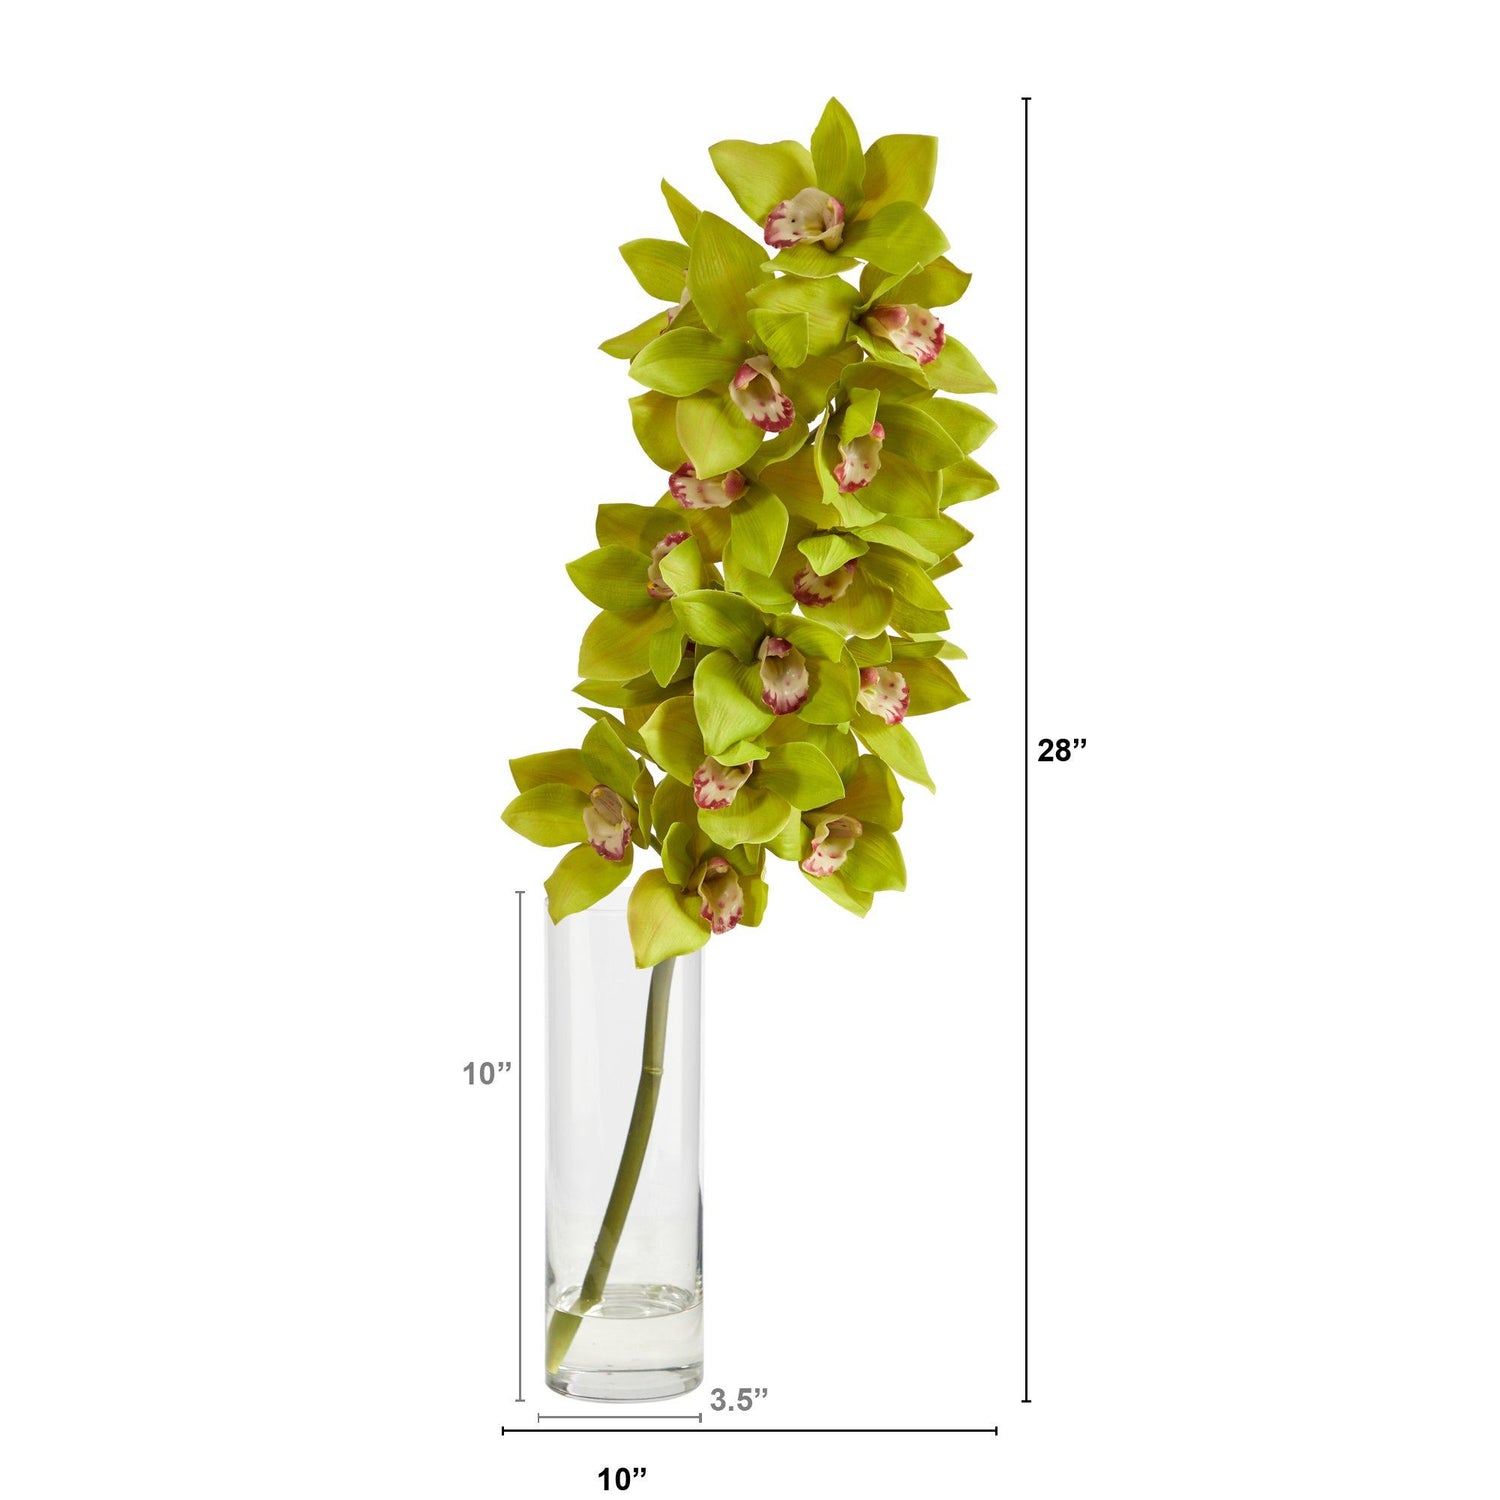 28” Cymbidium Orchid Artificial Arrangement in Glass Vase